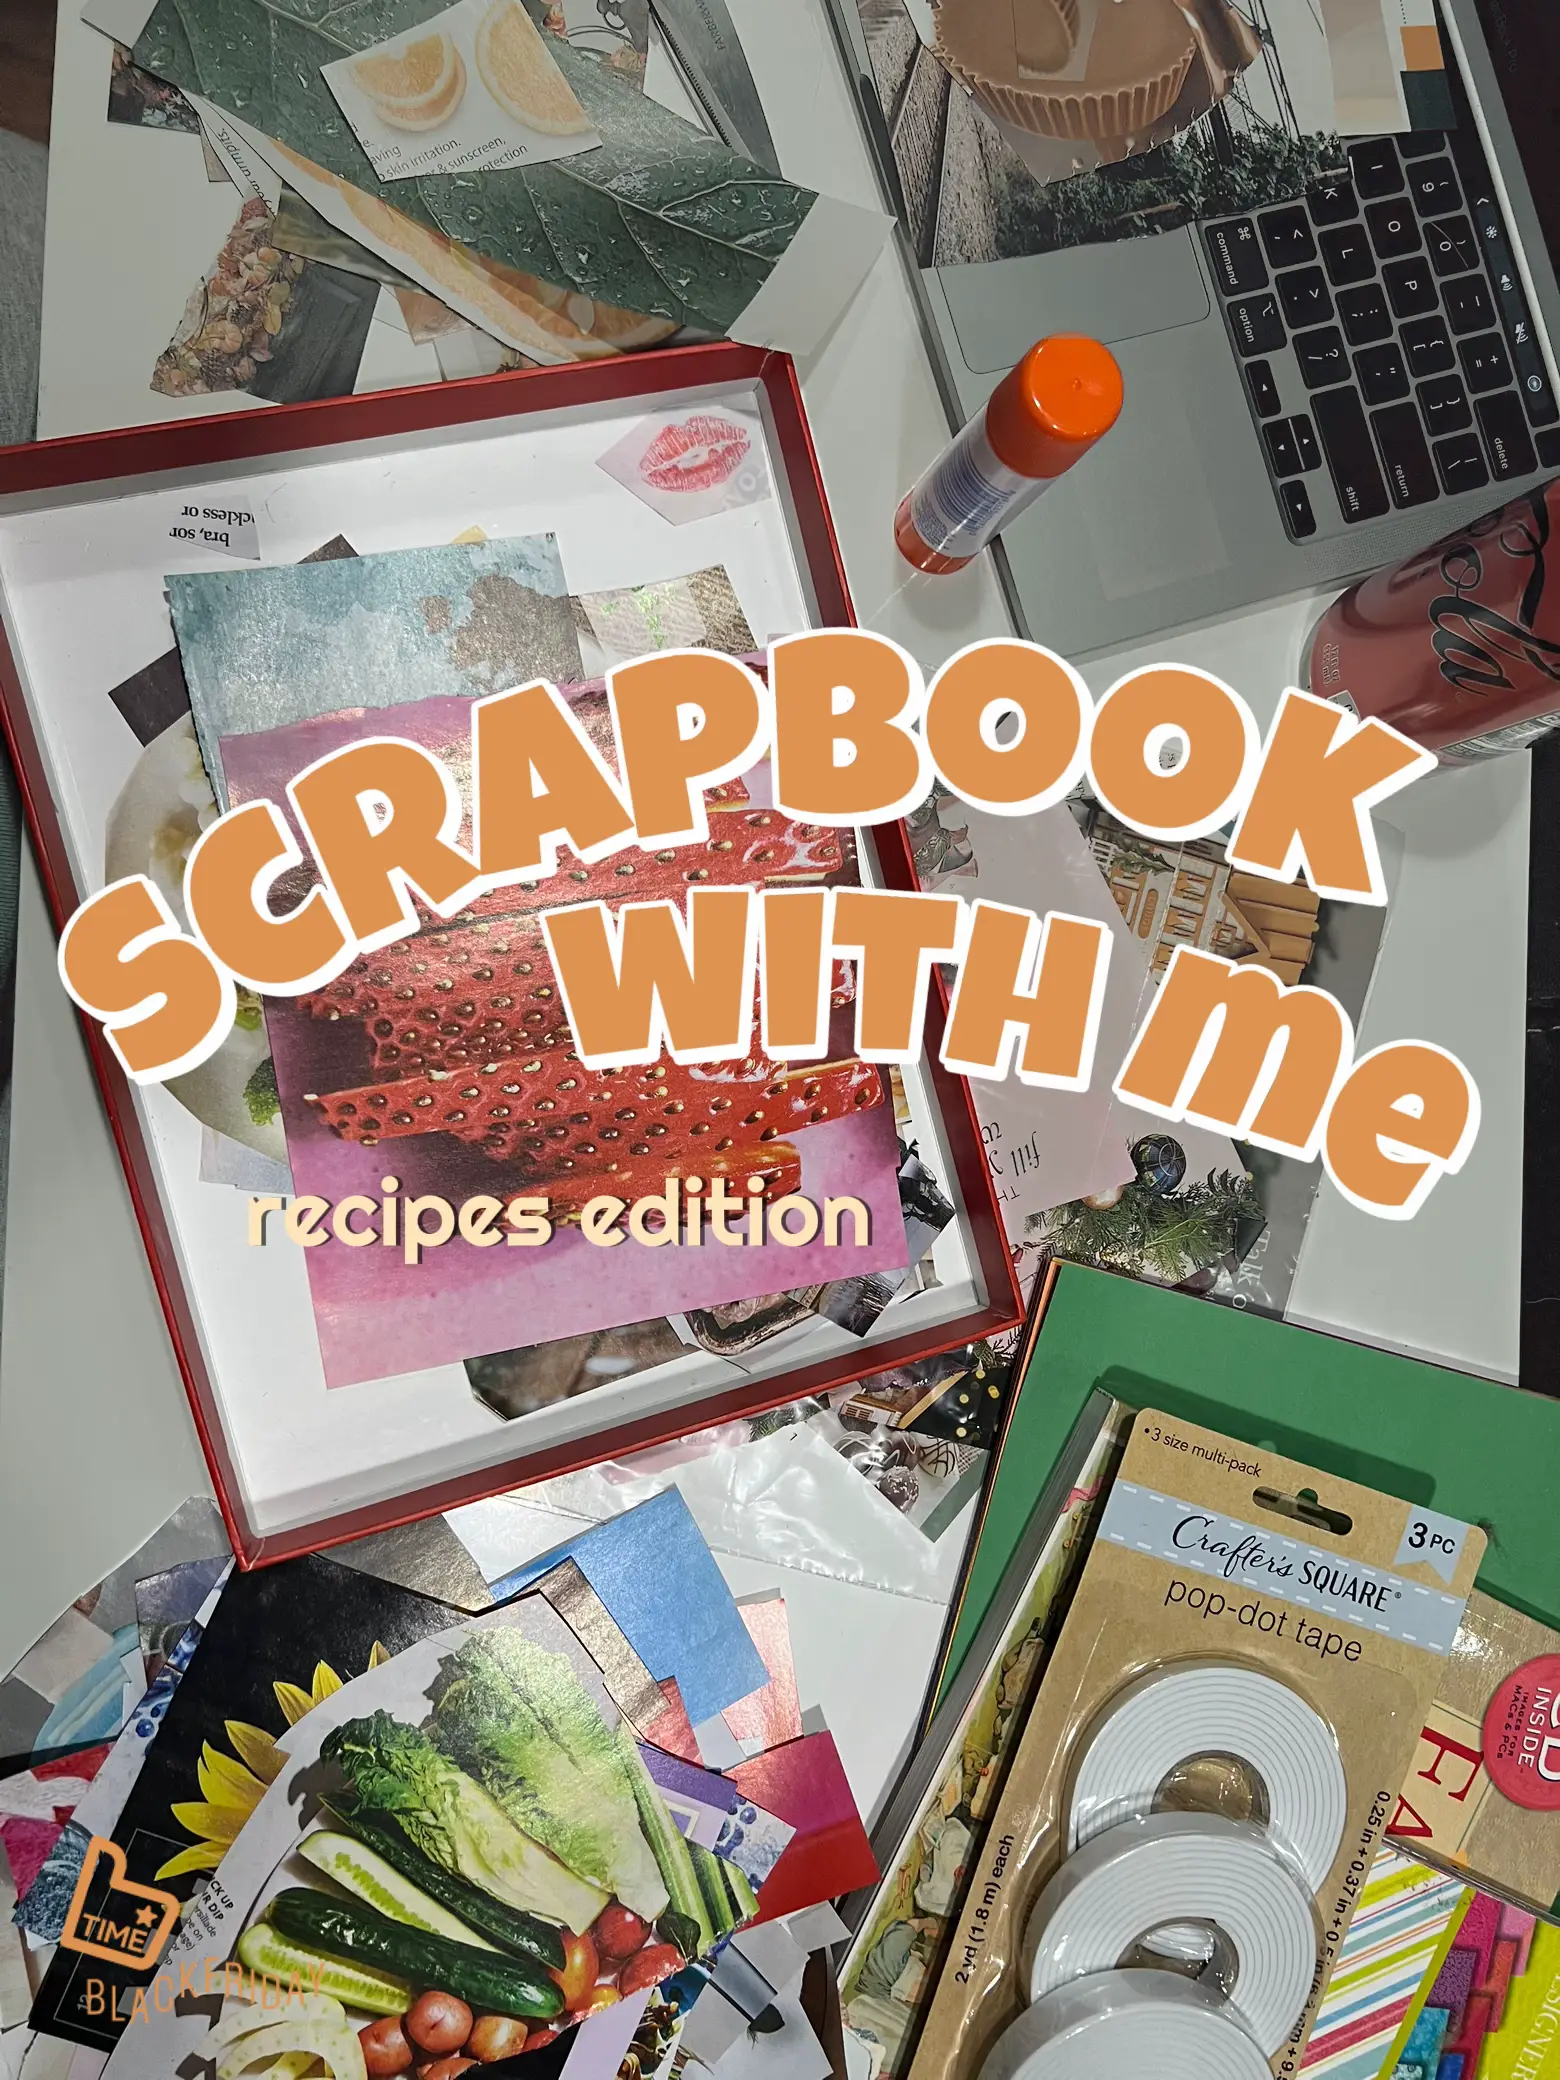 anniversary scrapbook ideas - Lemon8 Search